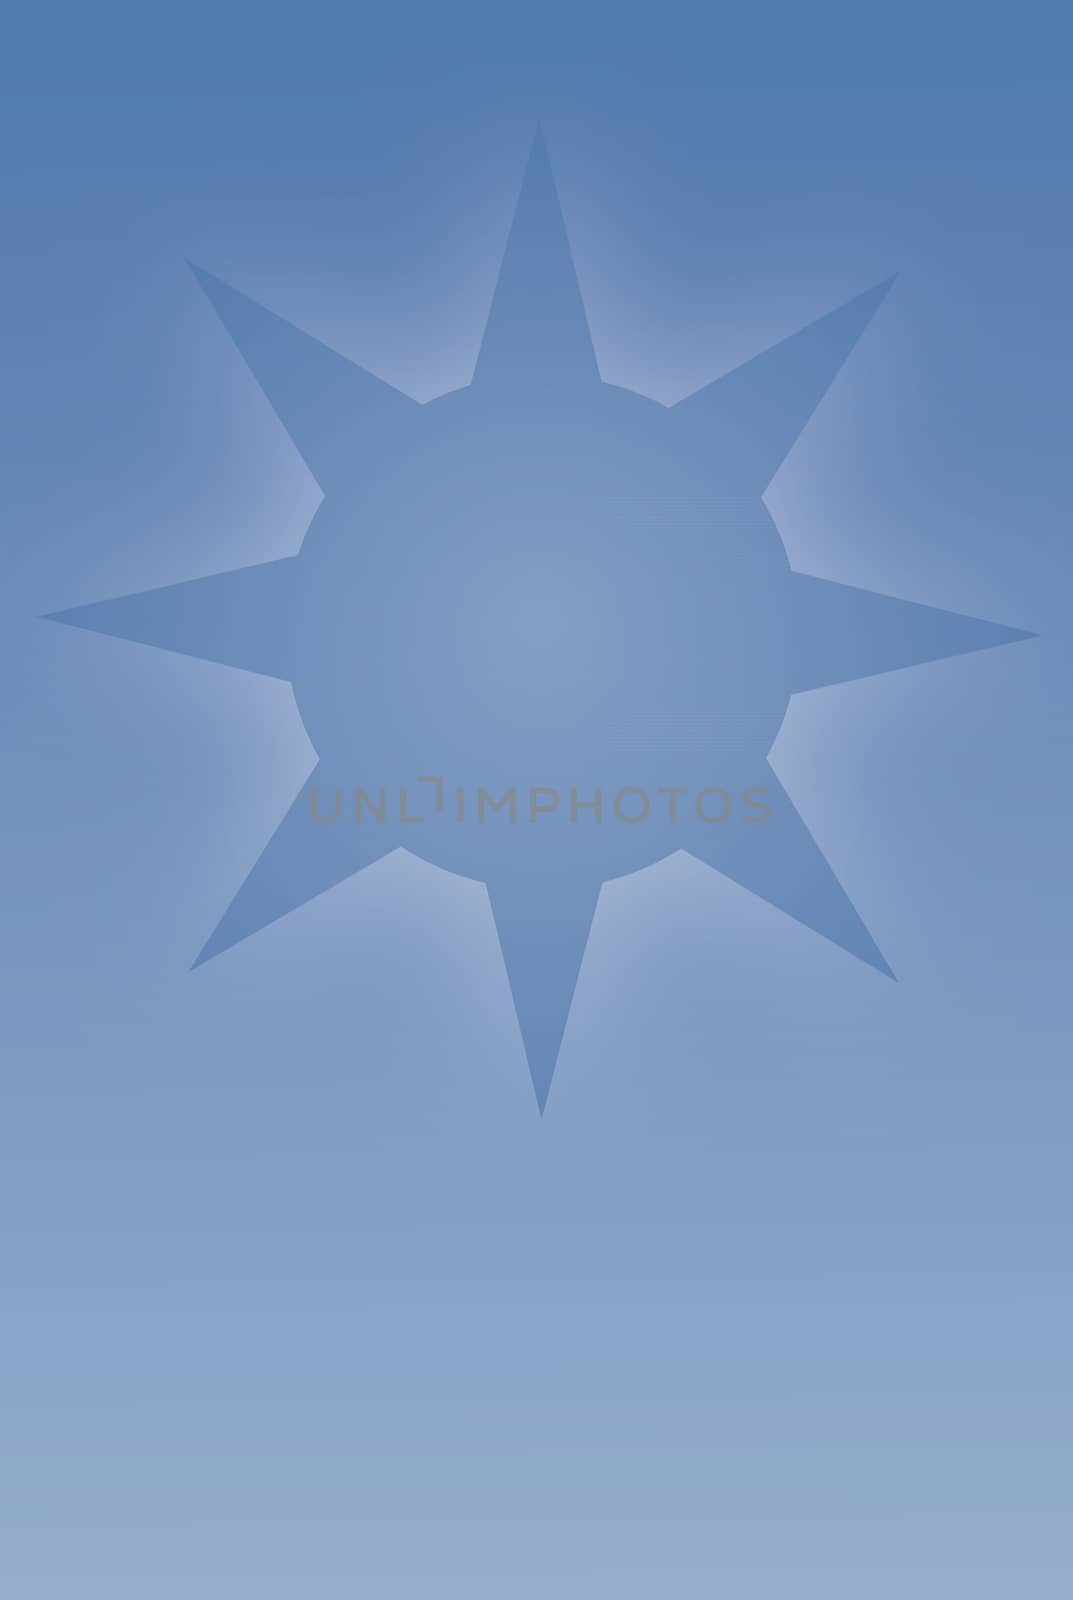 blue design background wit star and light